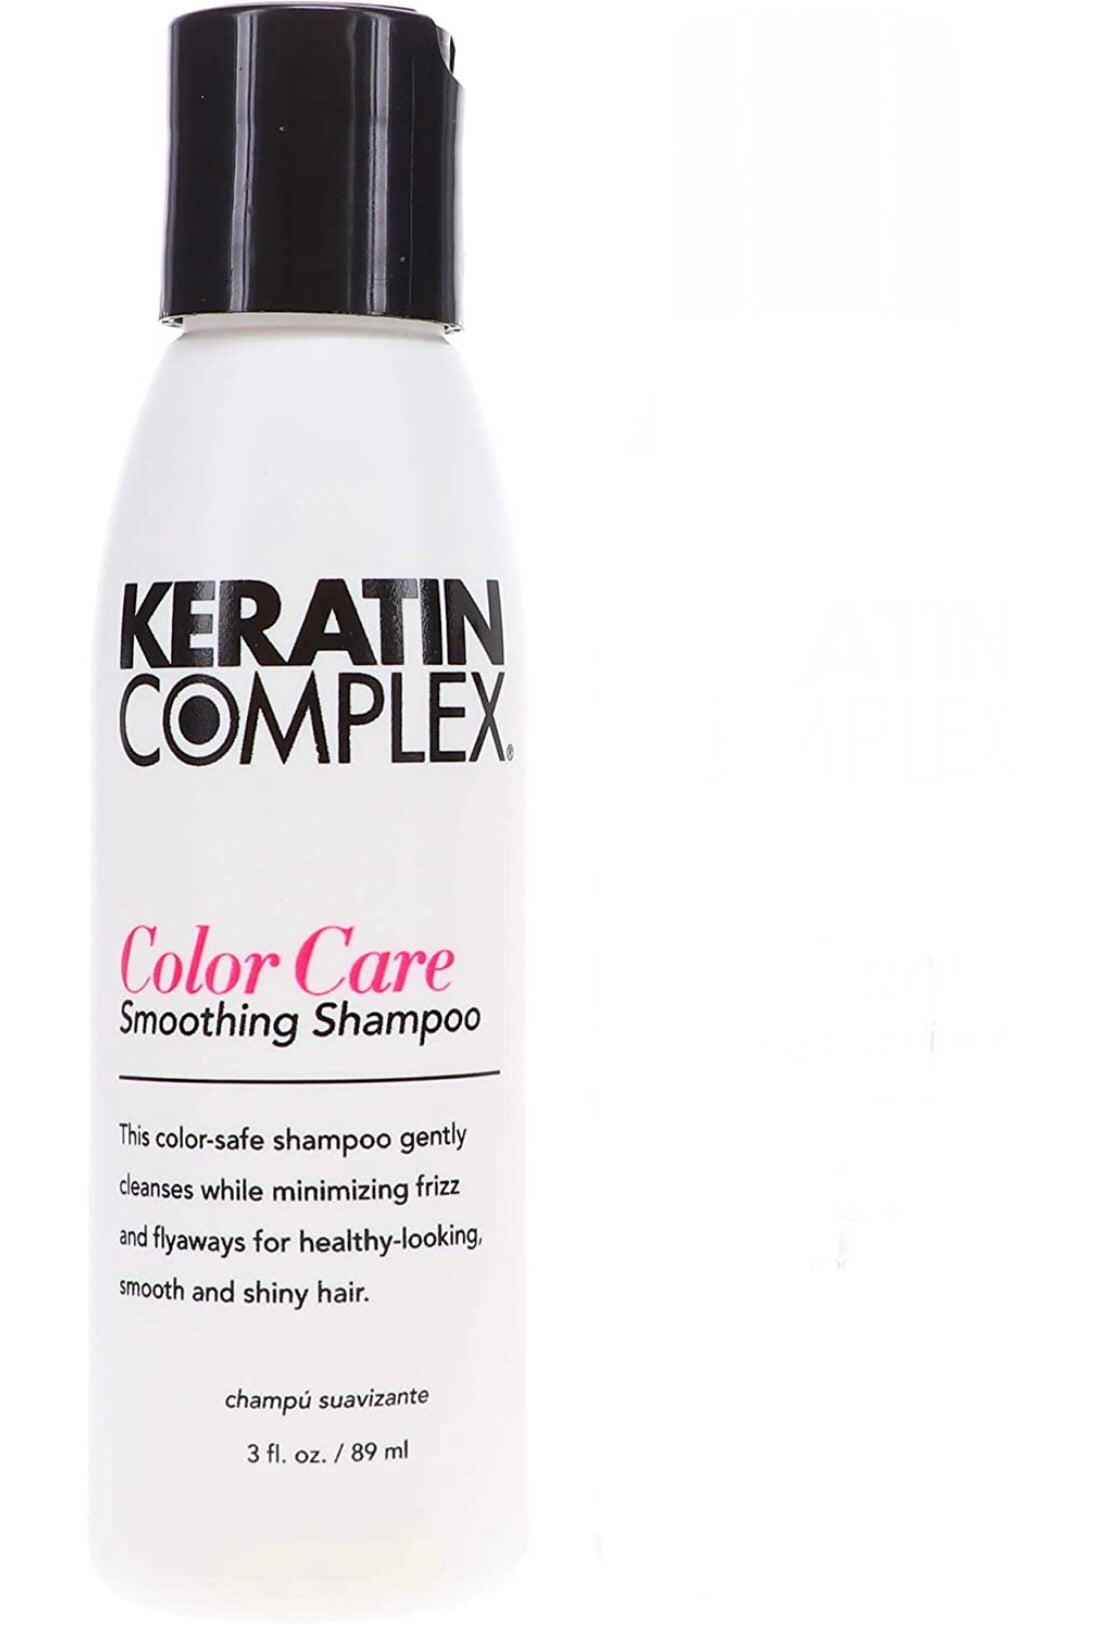 Keratin complex - Color Care shampoo 3 fl. oz./ 89 ml